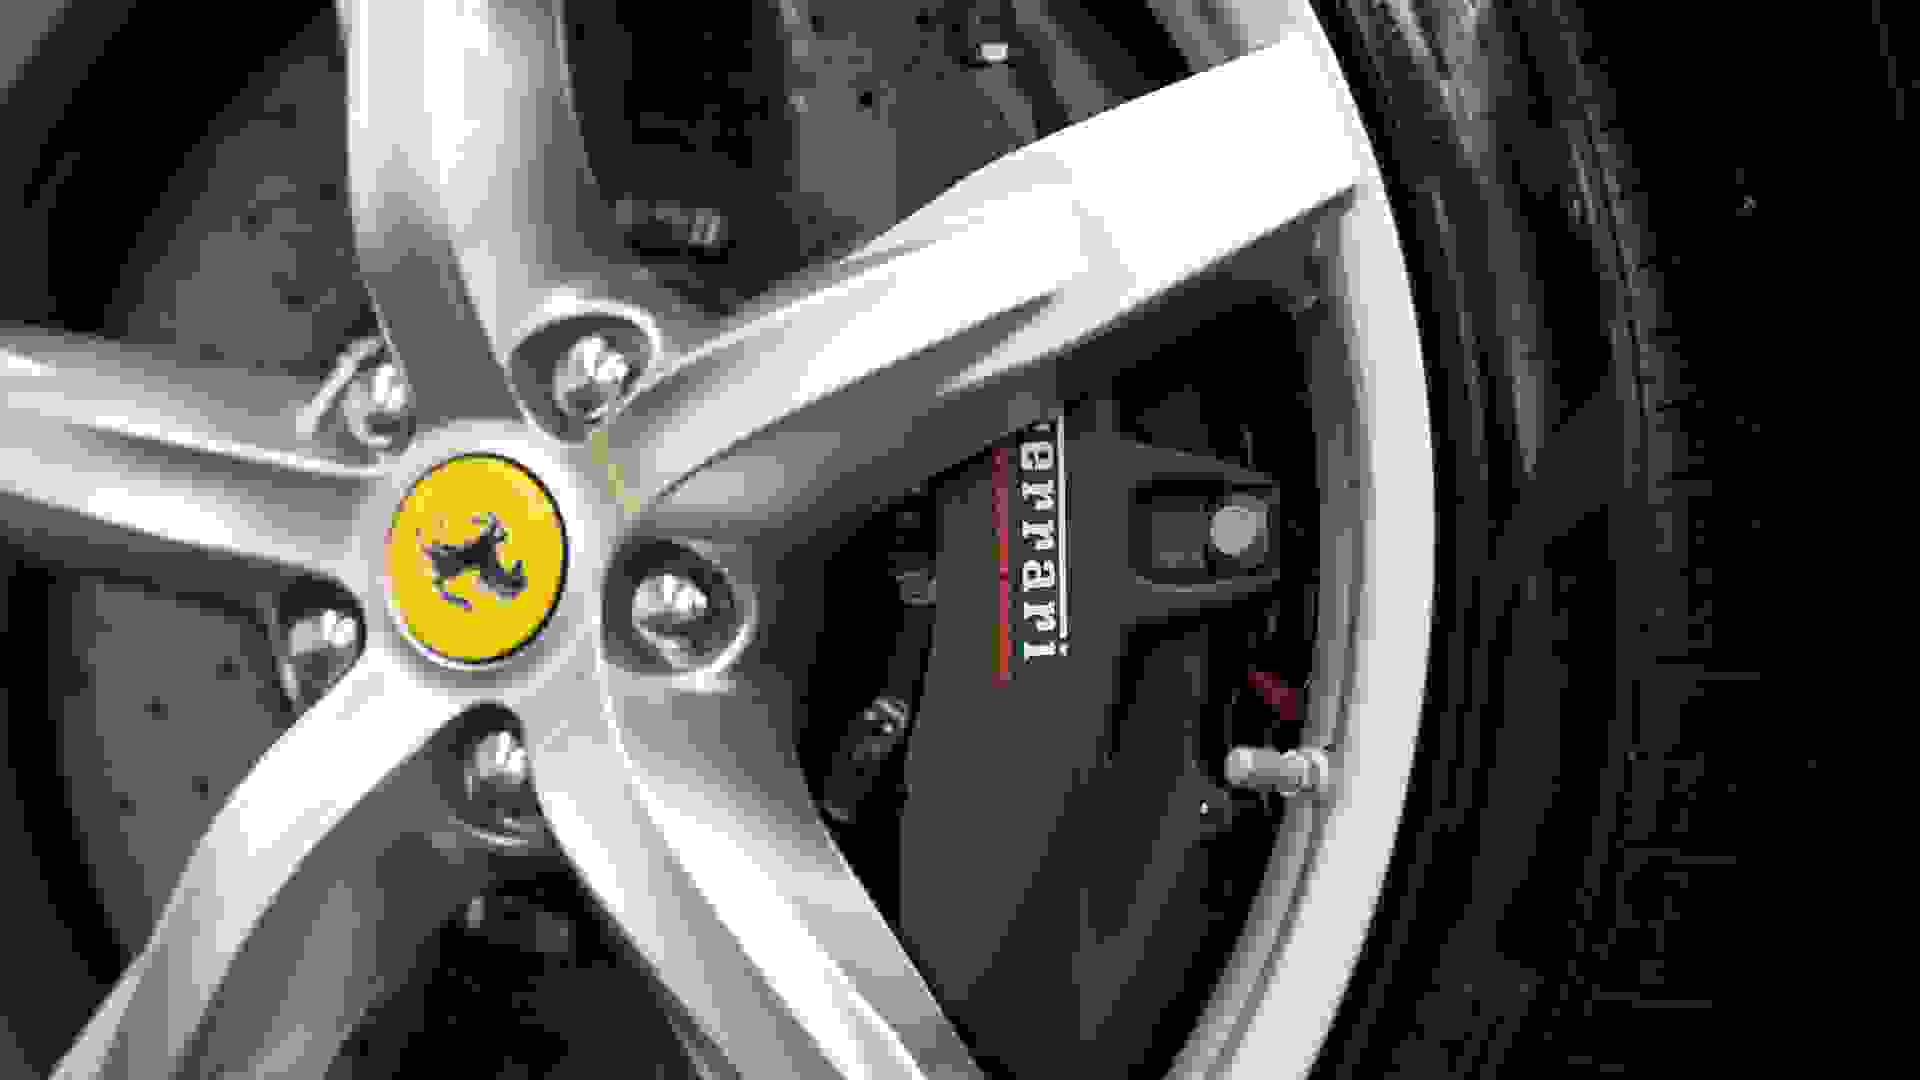 Ferrari GTC4 LUSSO T Photo 9eca0176-3657-4055-8506-0b636add8a41.jpg